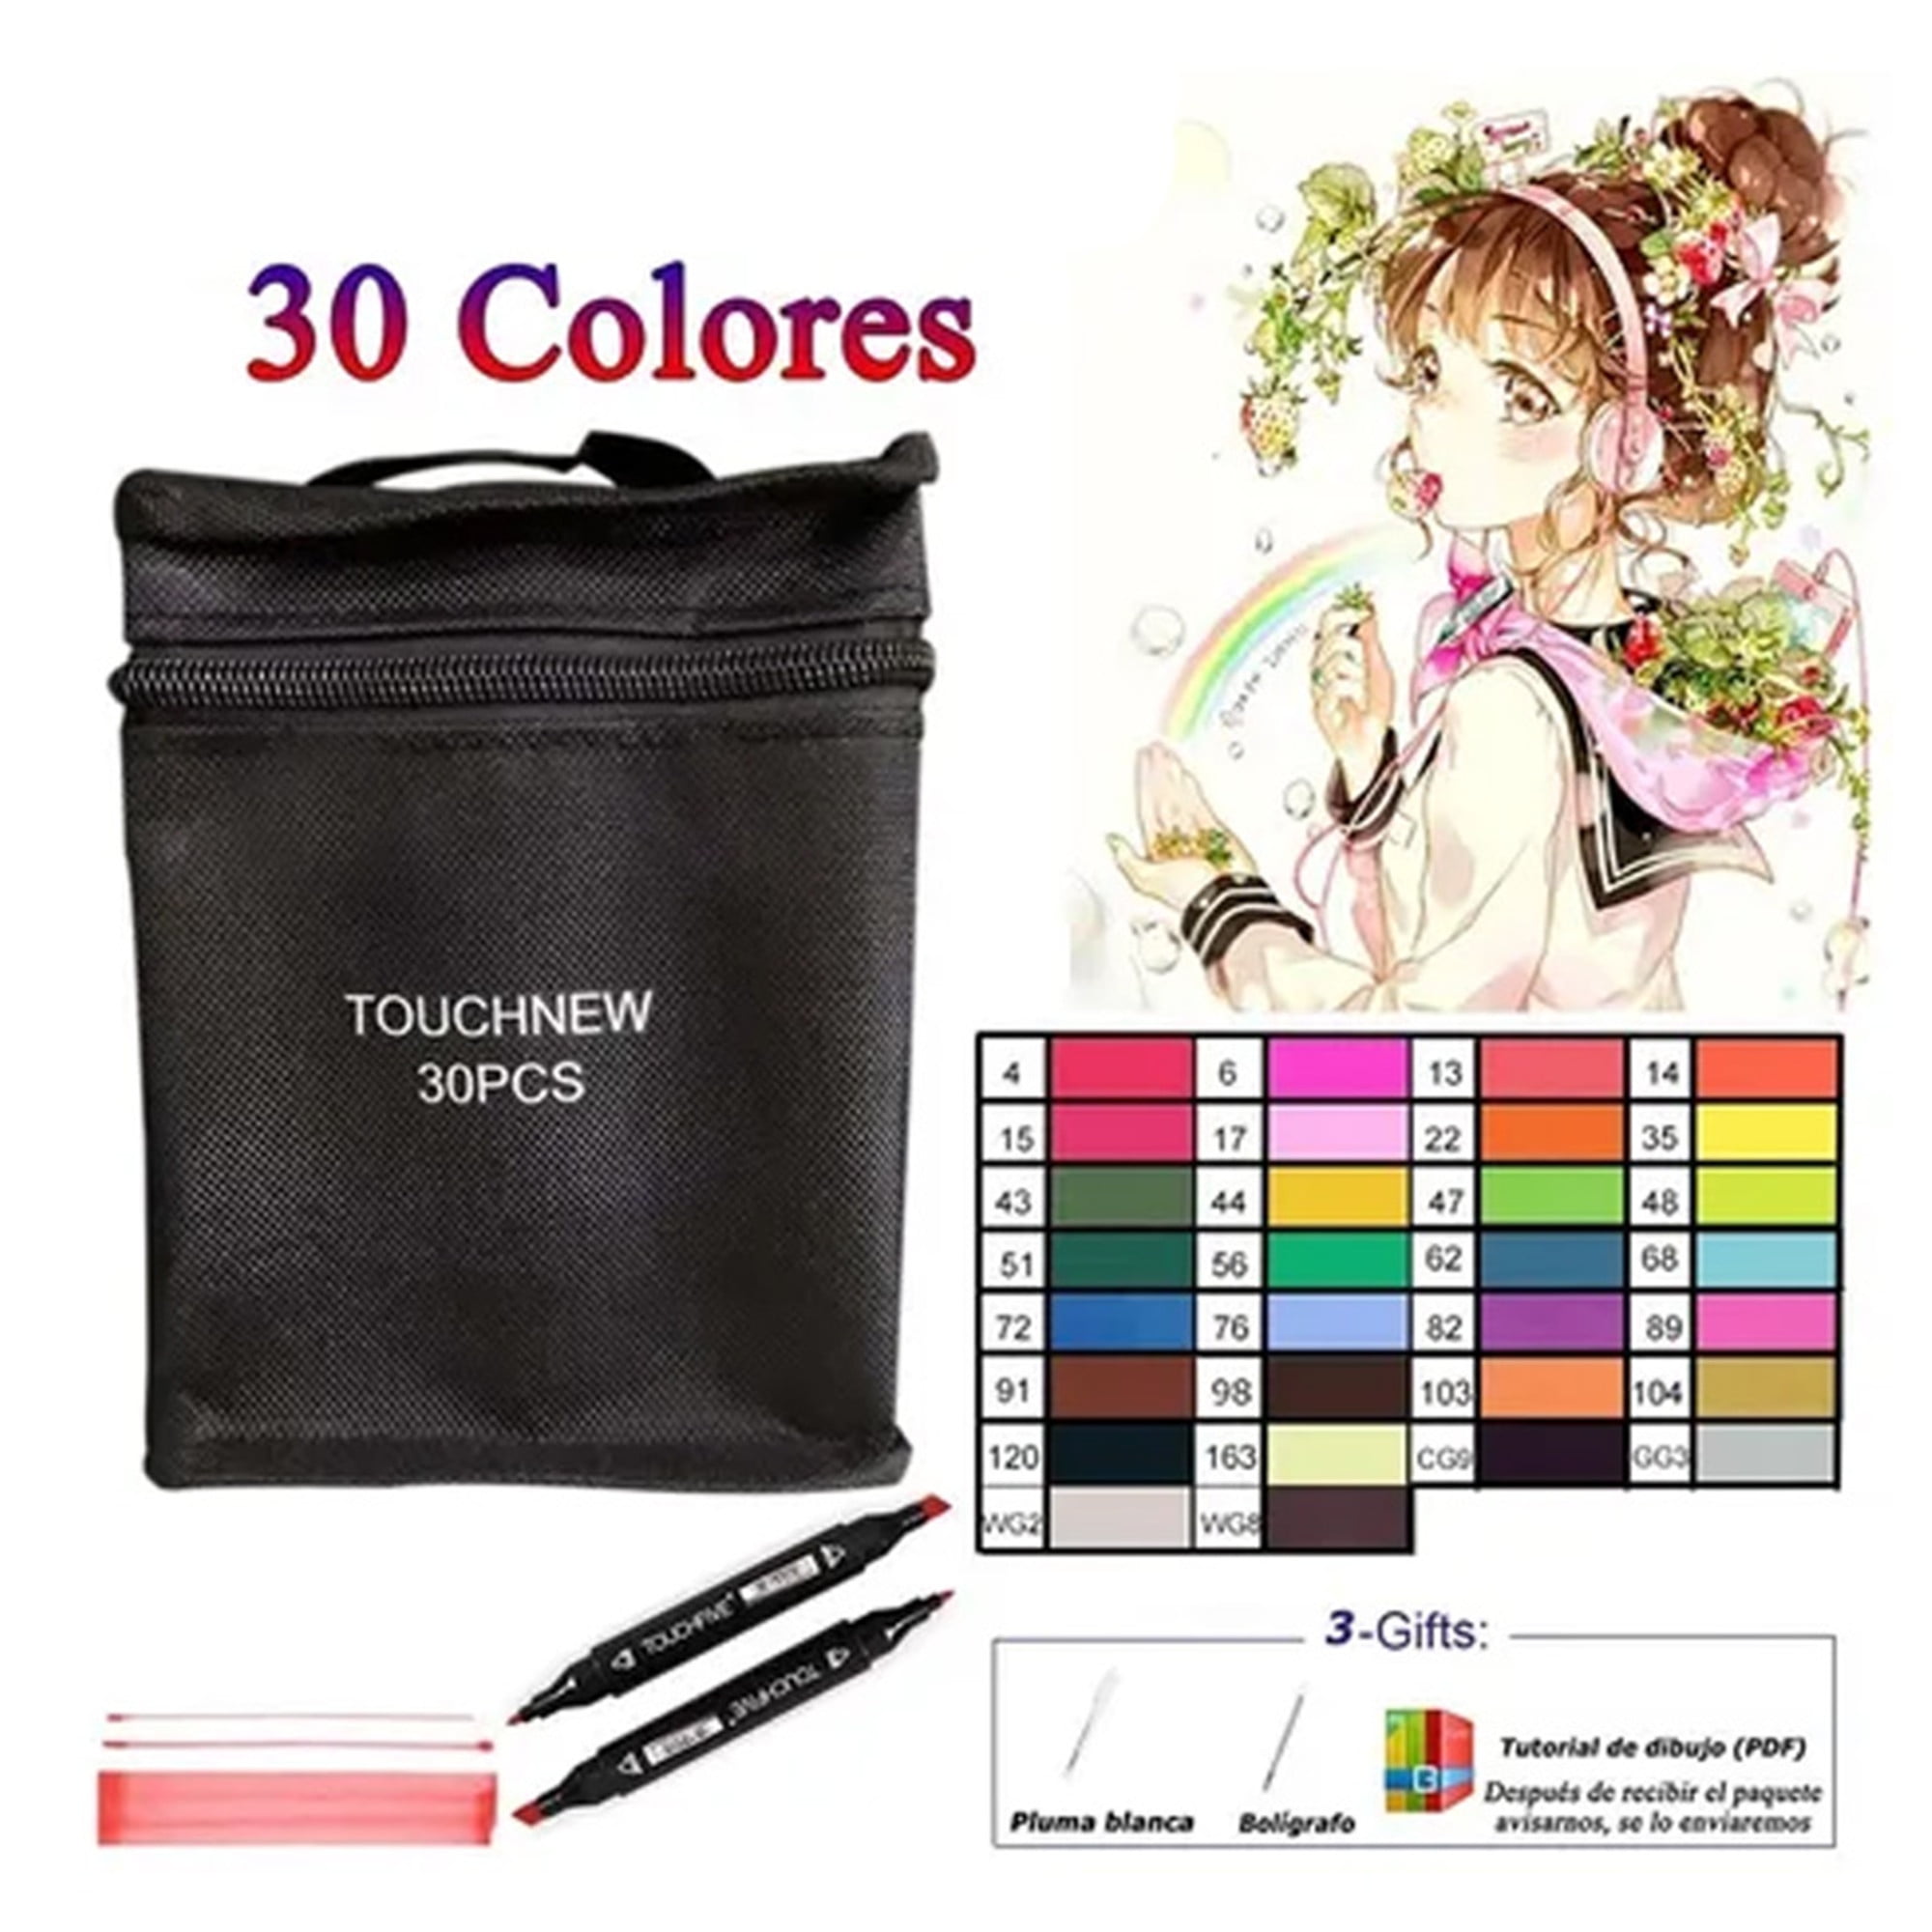 30 Colors - Black 30 Colors Set- Alcohol Based Artist Markers Adult Kids Drawing Painting Coloring Manga Sketching NetEra Dual Tip Brush Artist Marker Pens